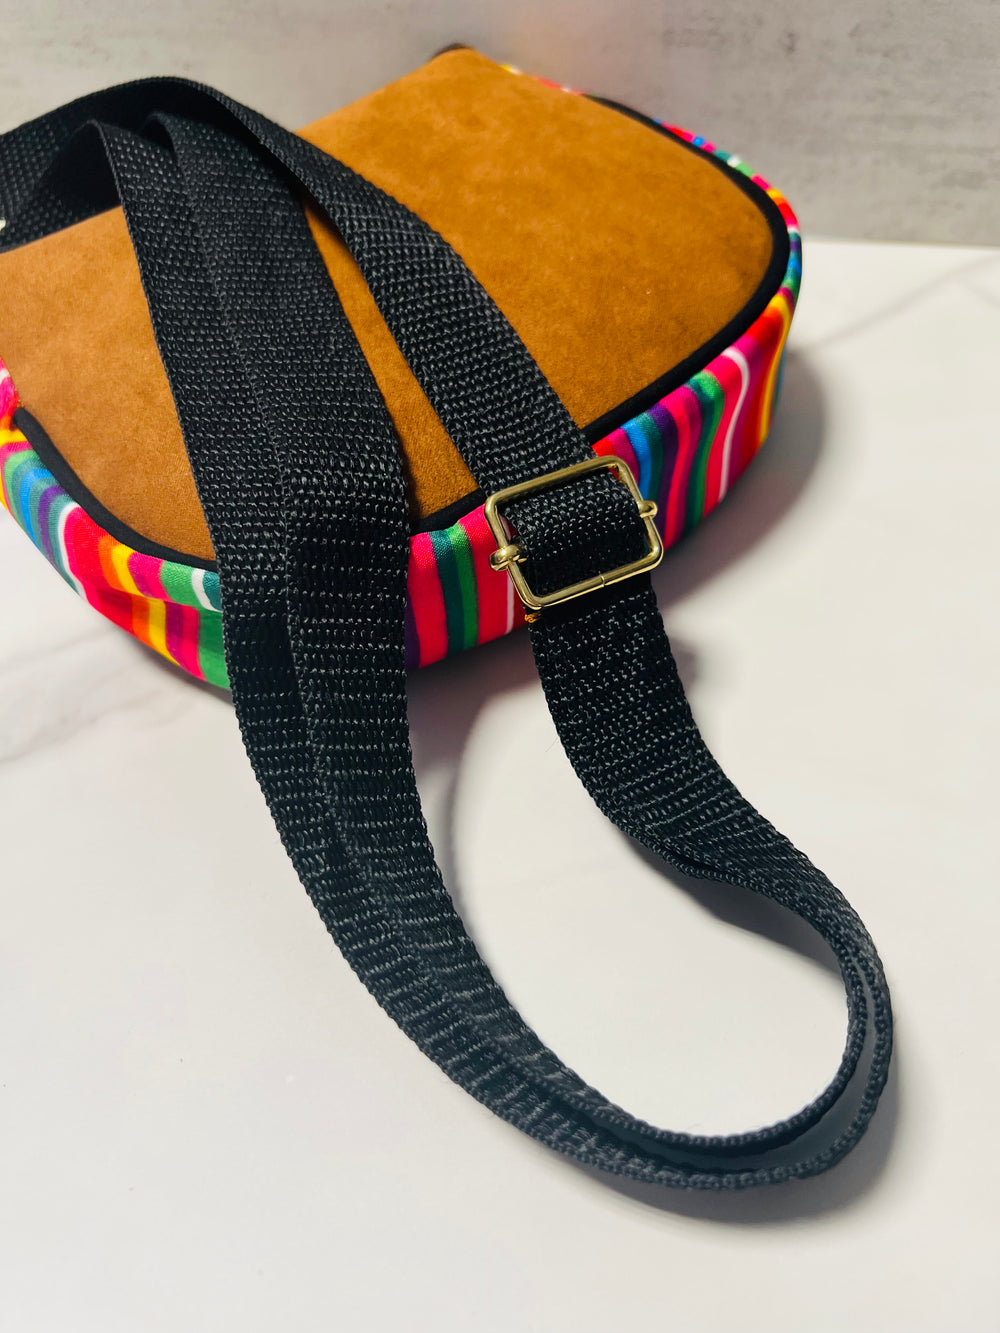 Made in Mexico Frida Kahlo Tlaquepaque Crossbody Bag Purse